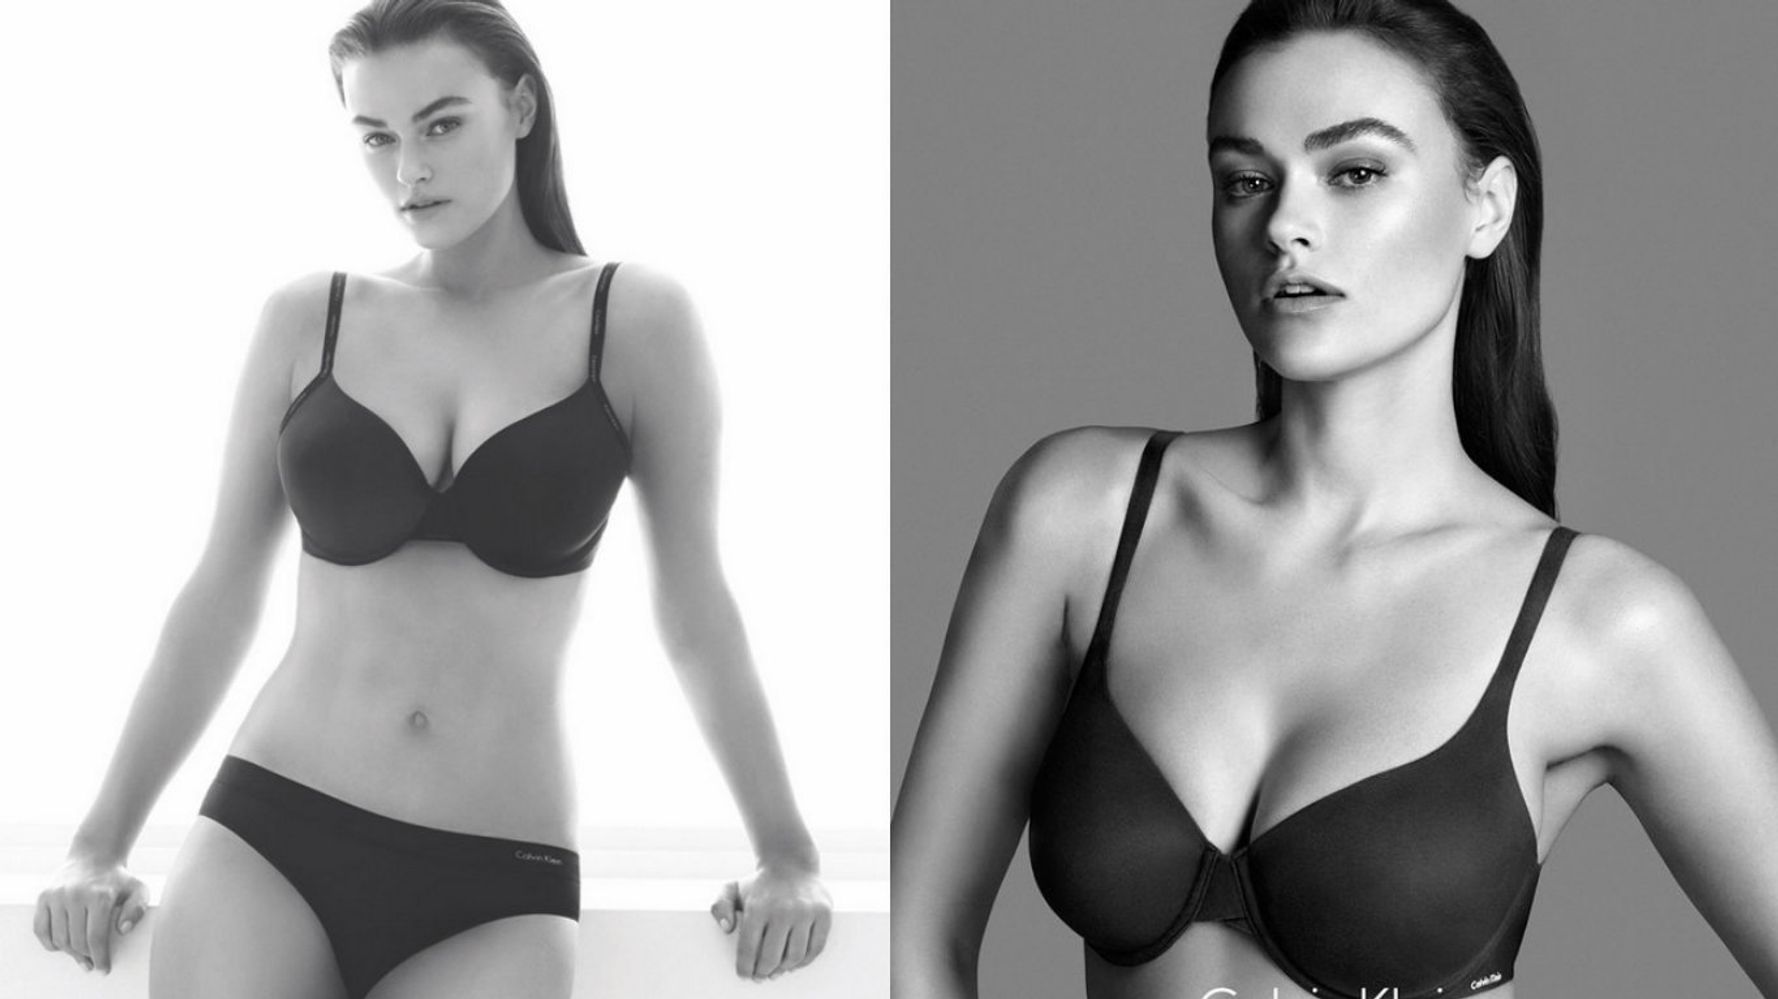 Model Myla Dalbesio: Calvin Klein using me is 'groundbreaking